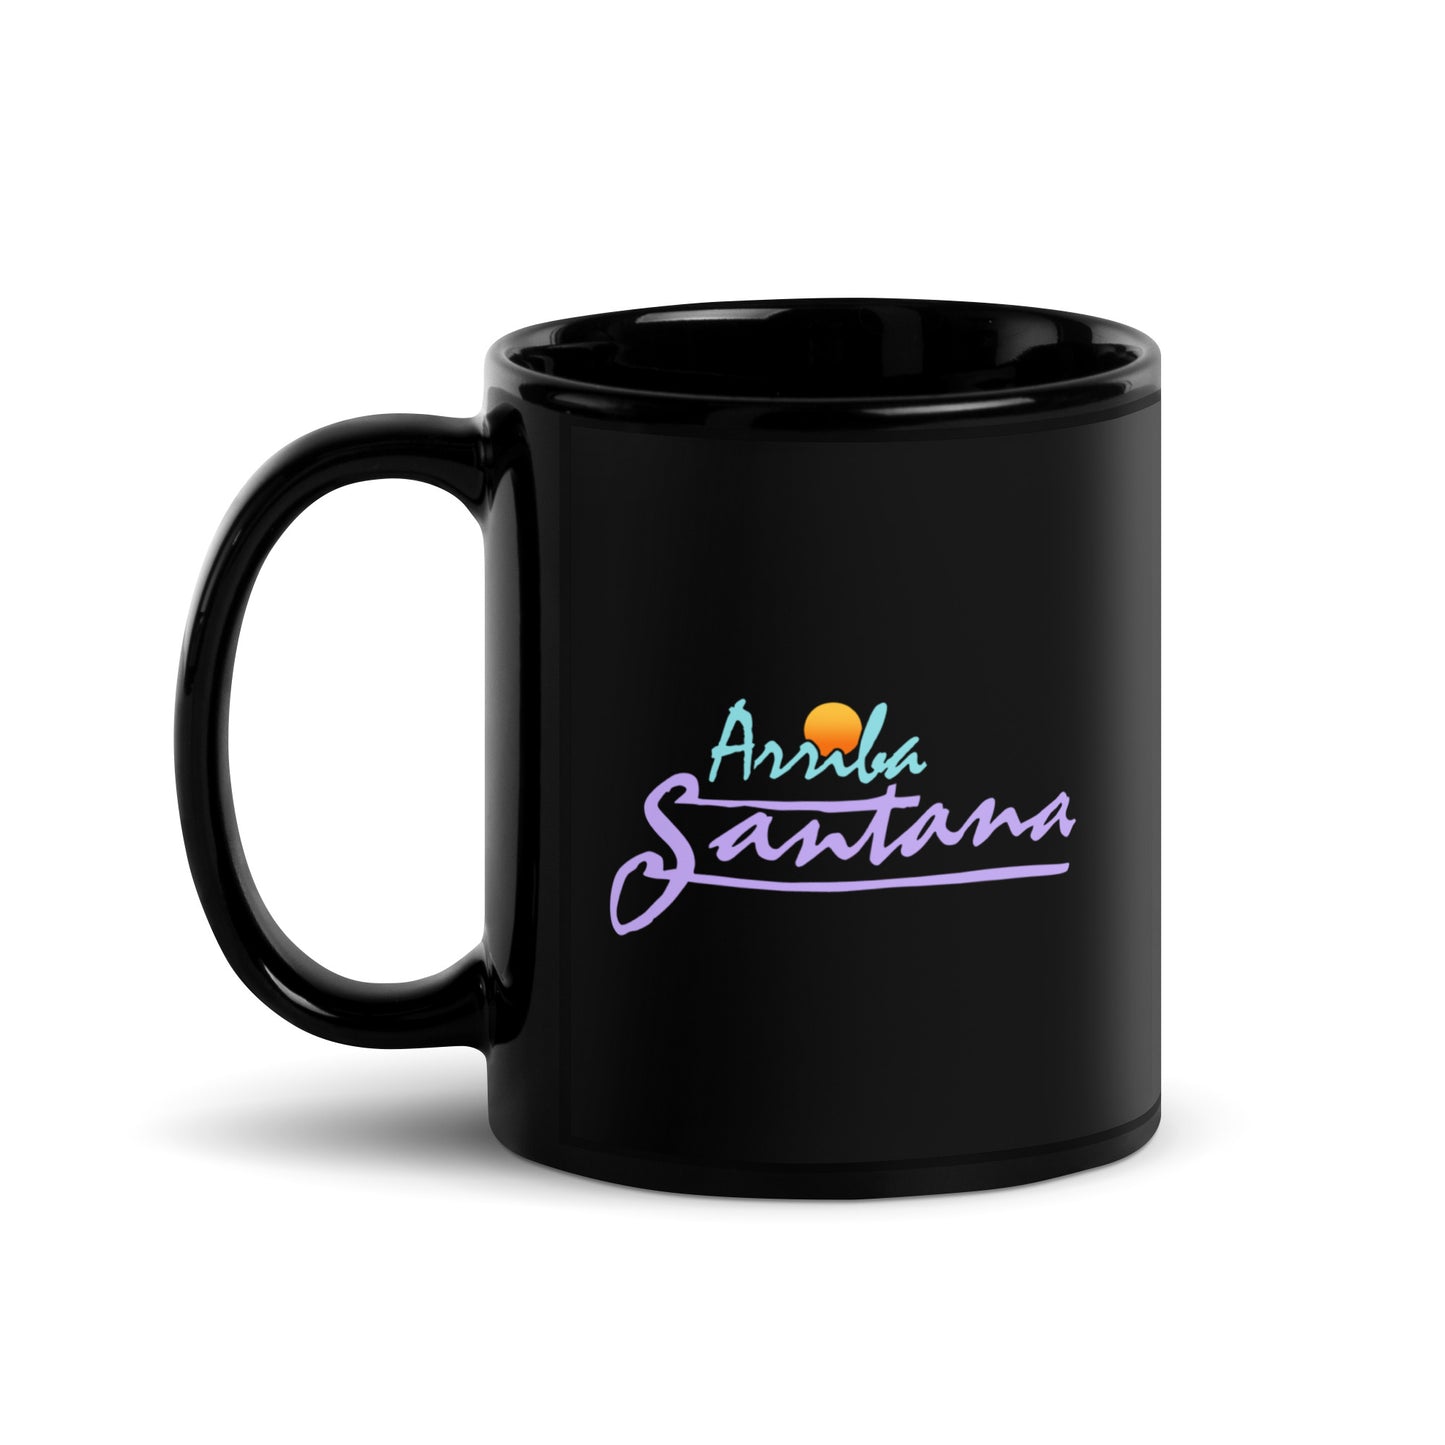 Tito's Arriba Santana Coffee Mug